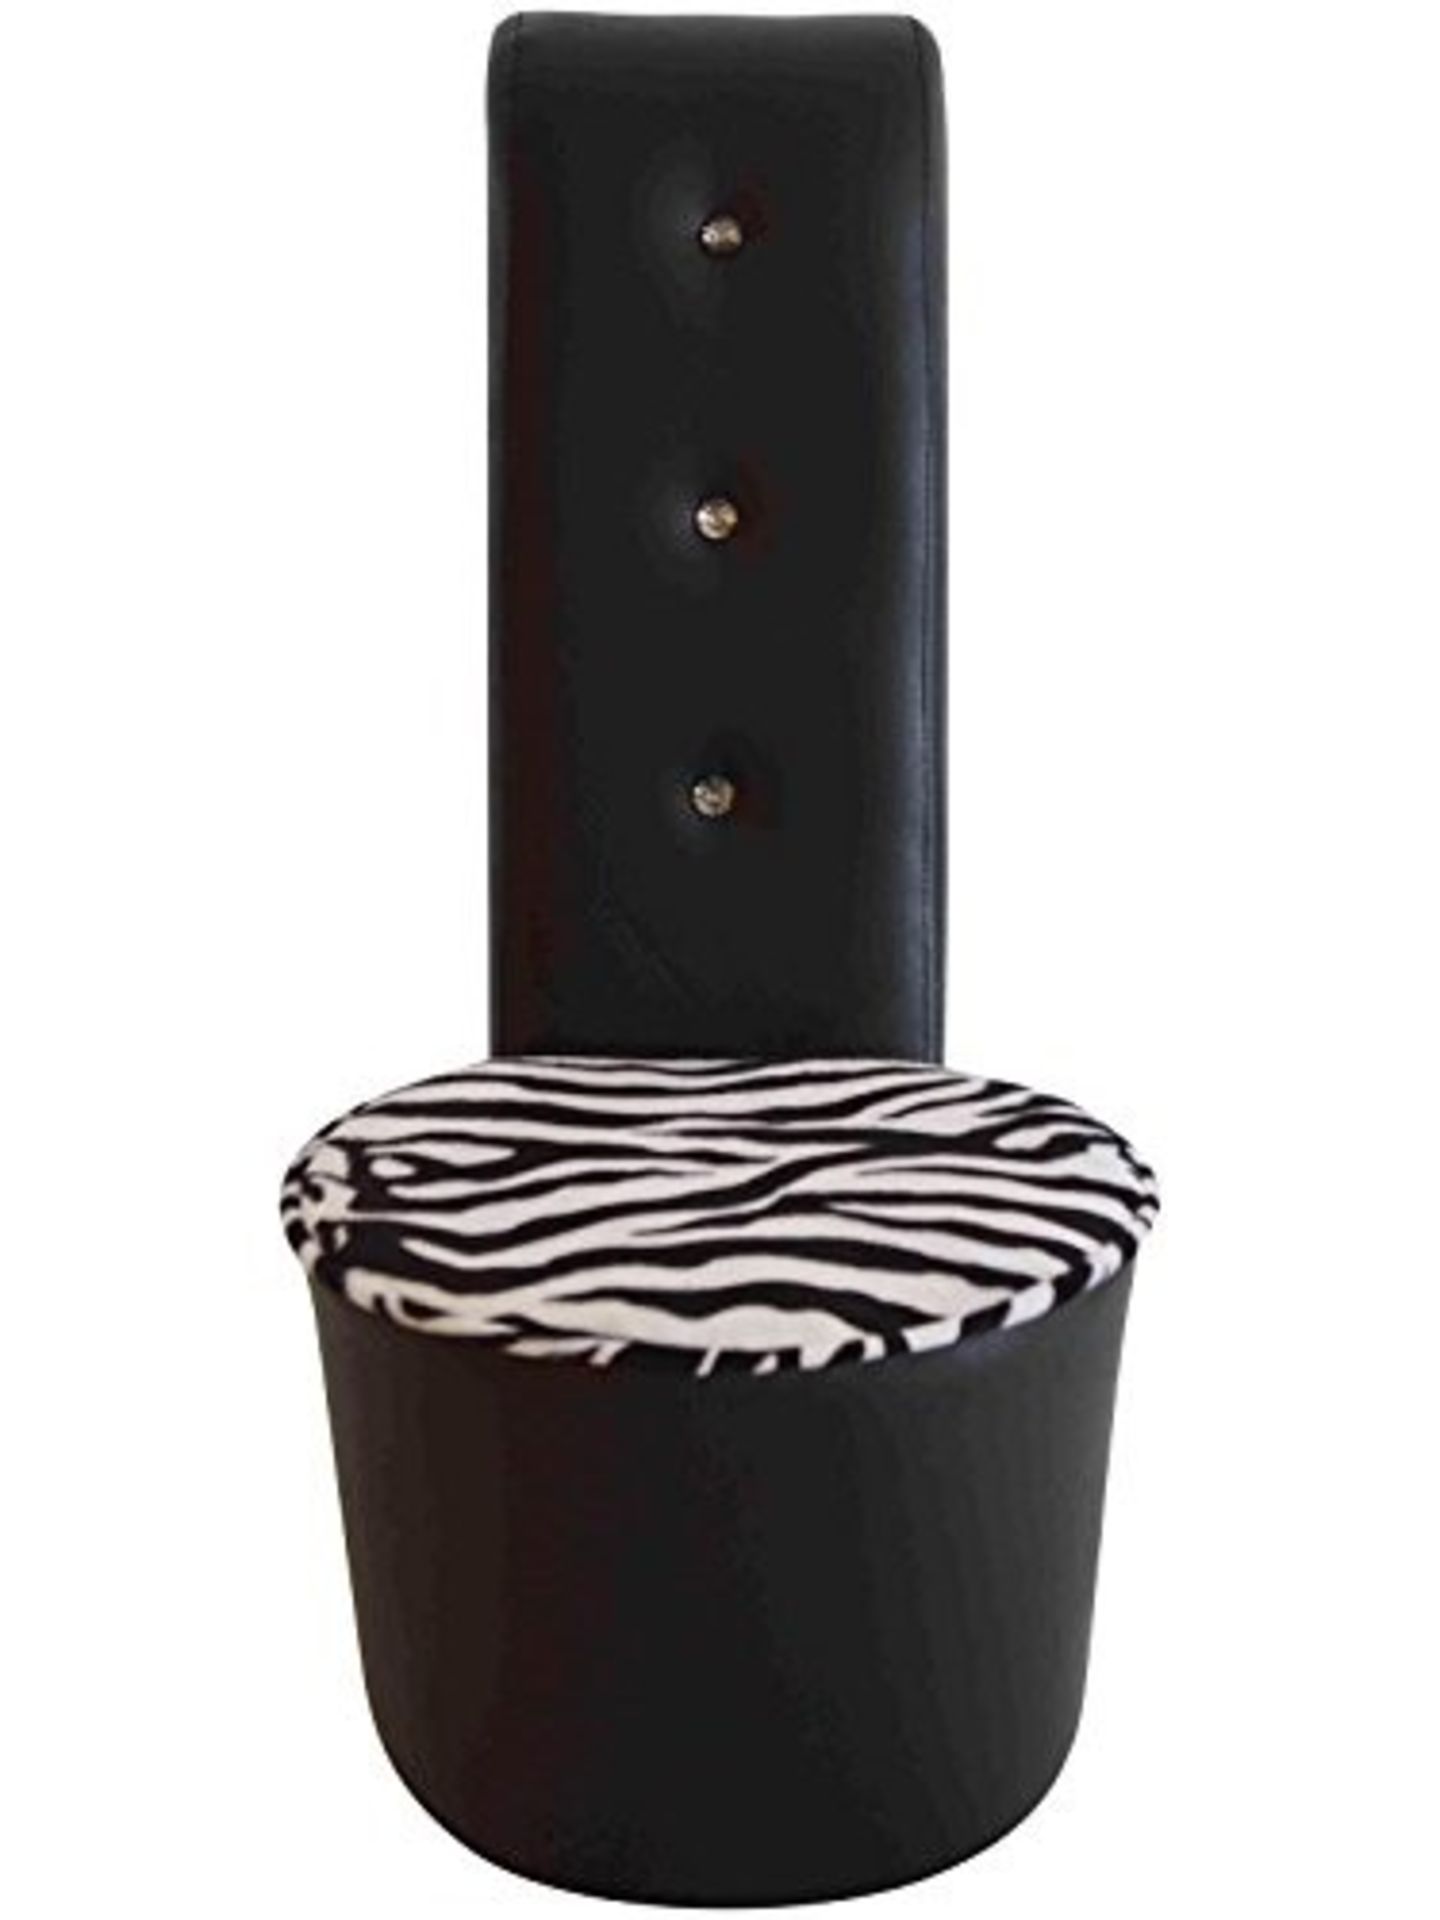 1 x Girls Black Stiletto Chair - Black Faux Leather with Diamantes & Zebra Print Design - Brand - Image 2 of 2